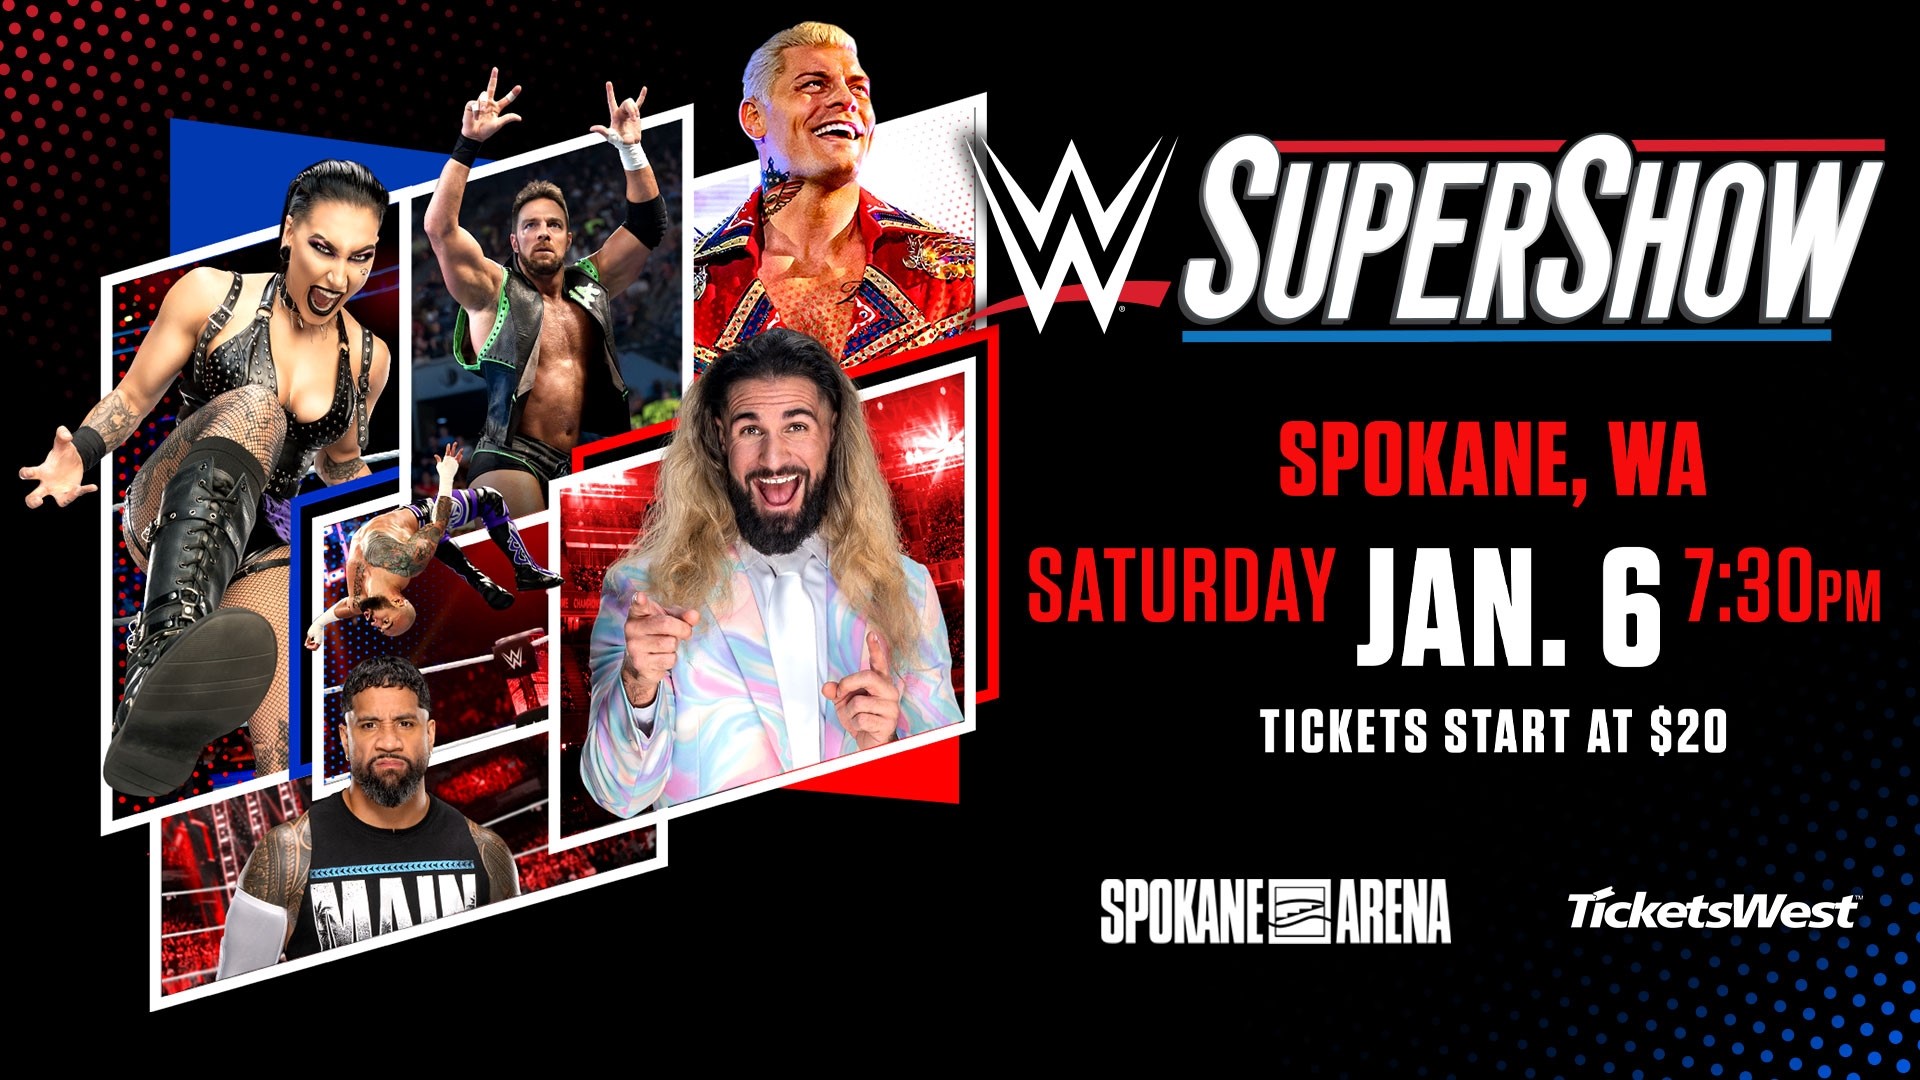 WWE SuperShow coming to the Spokane Arena